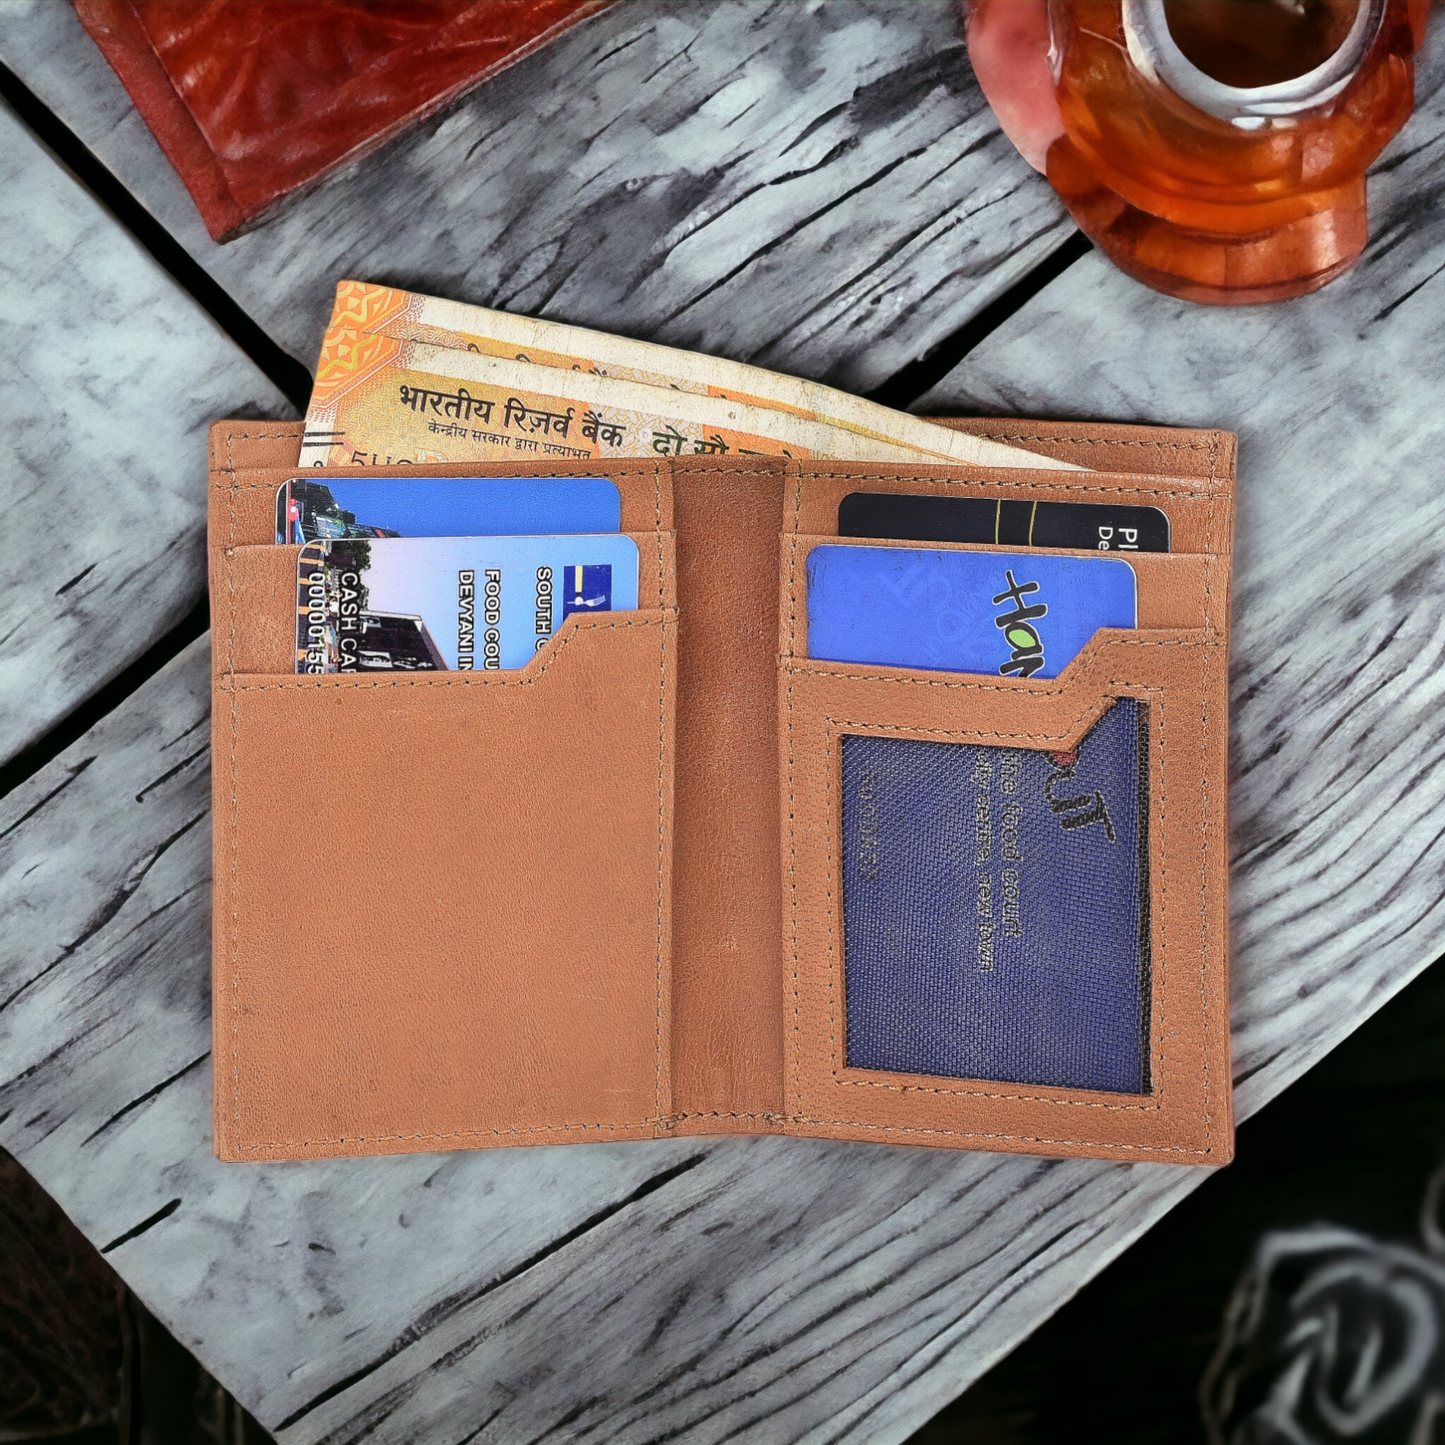 LINDSEY STREET Premium Leather Wallet for Men Leather Money Purse Credit Card Holder | Gift for Him